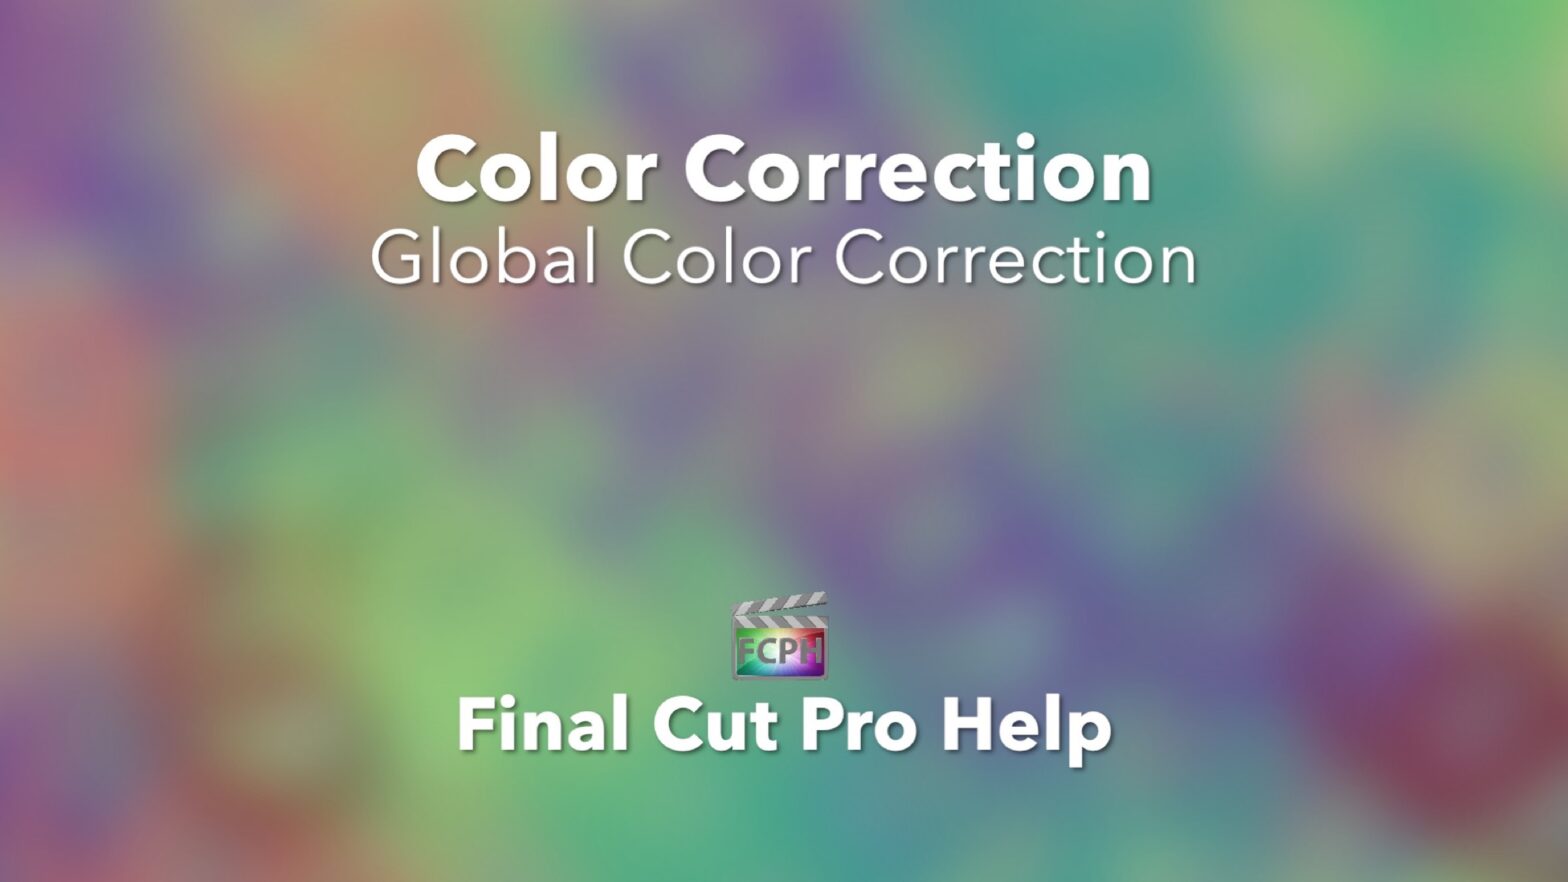 Global Color Correction